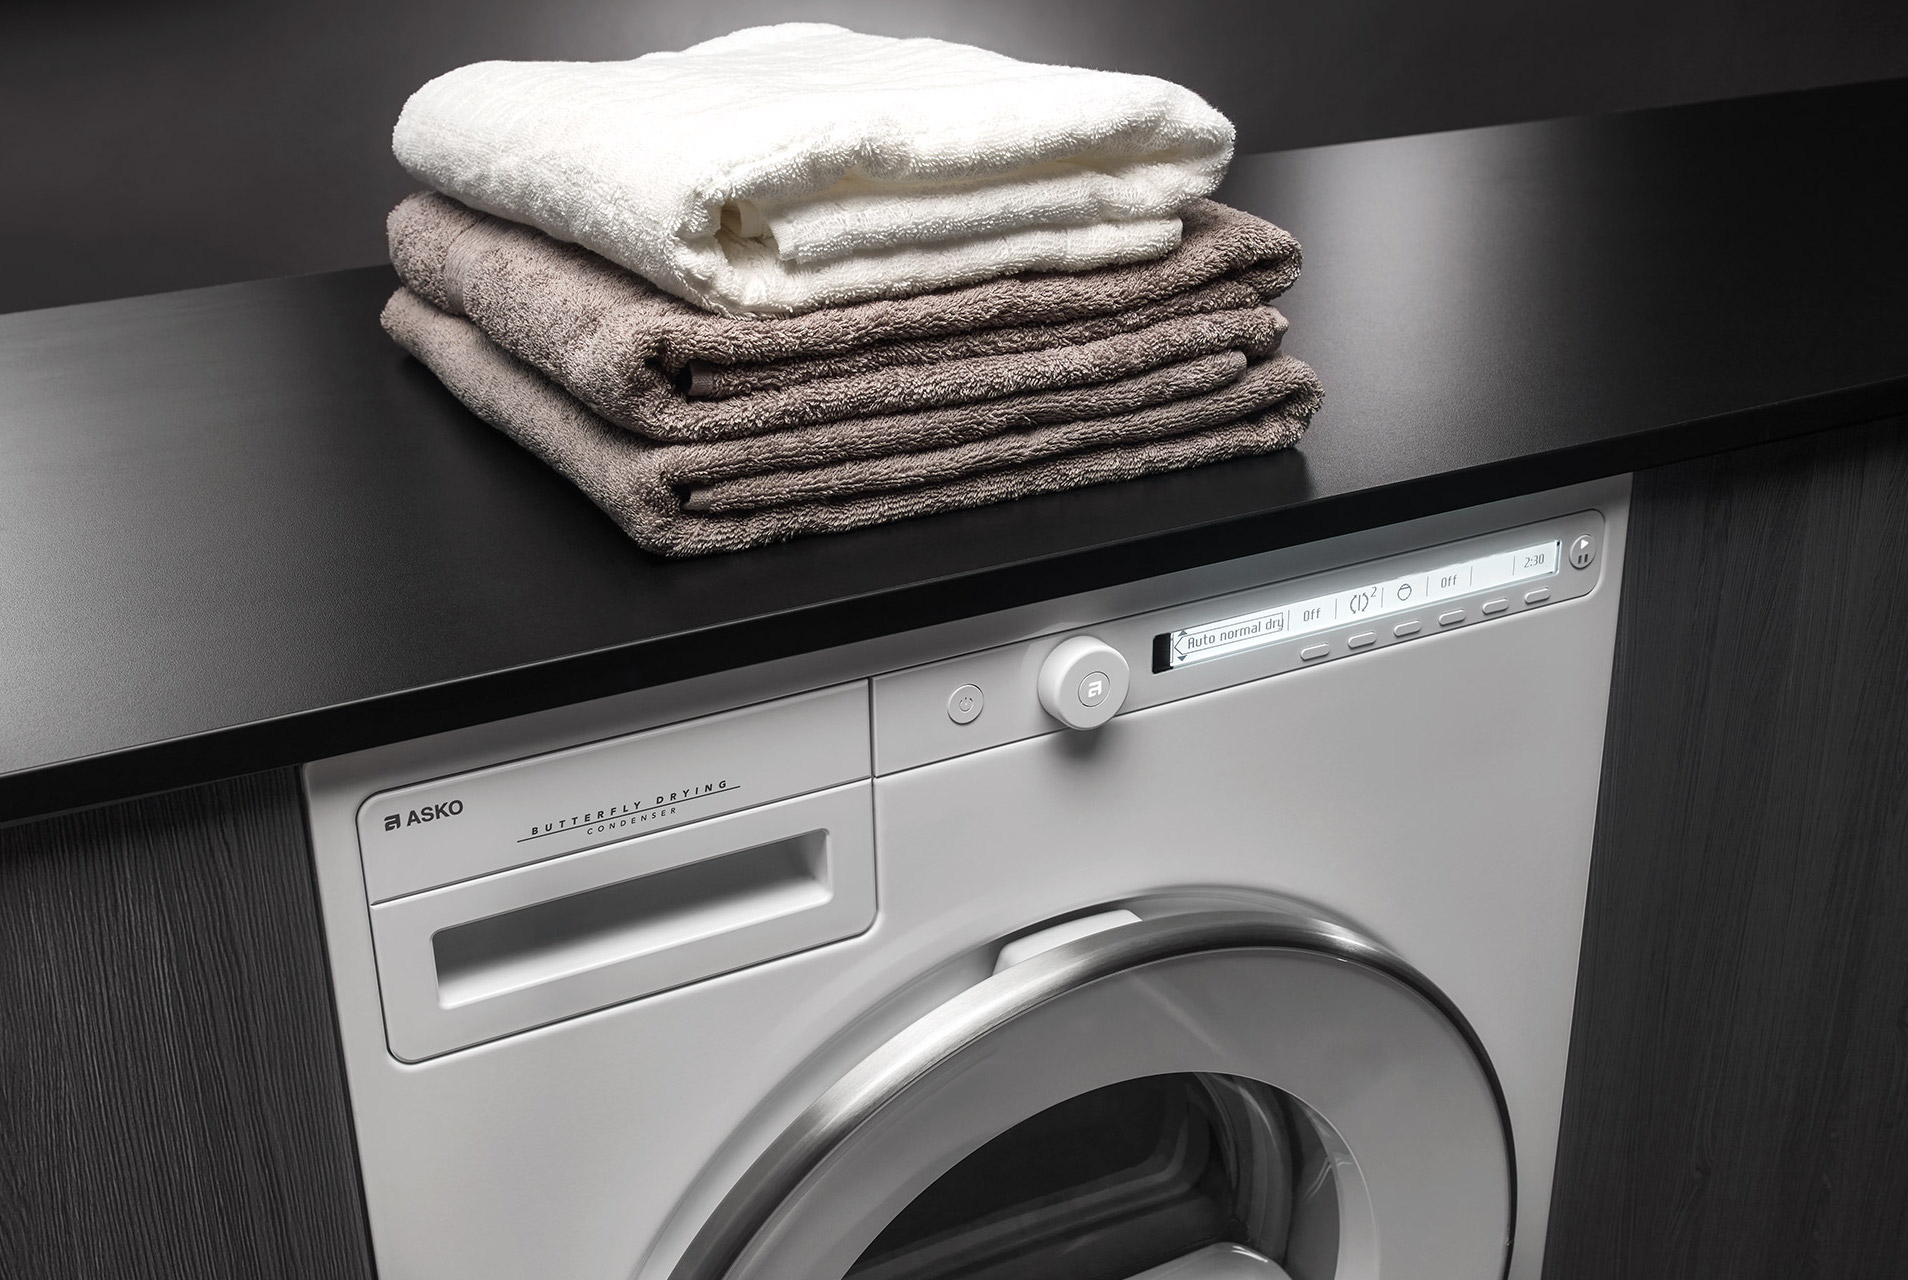 ASKO-Laundry-Tumble-Dryers-Classic.jpg